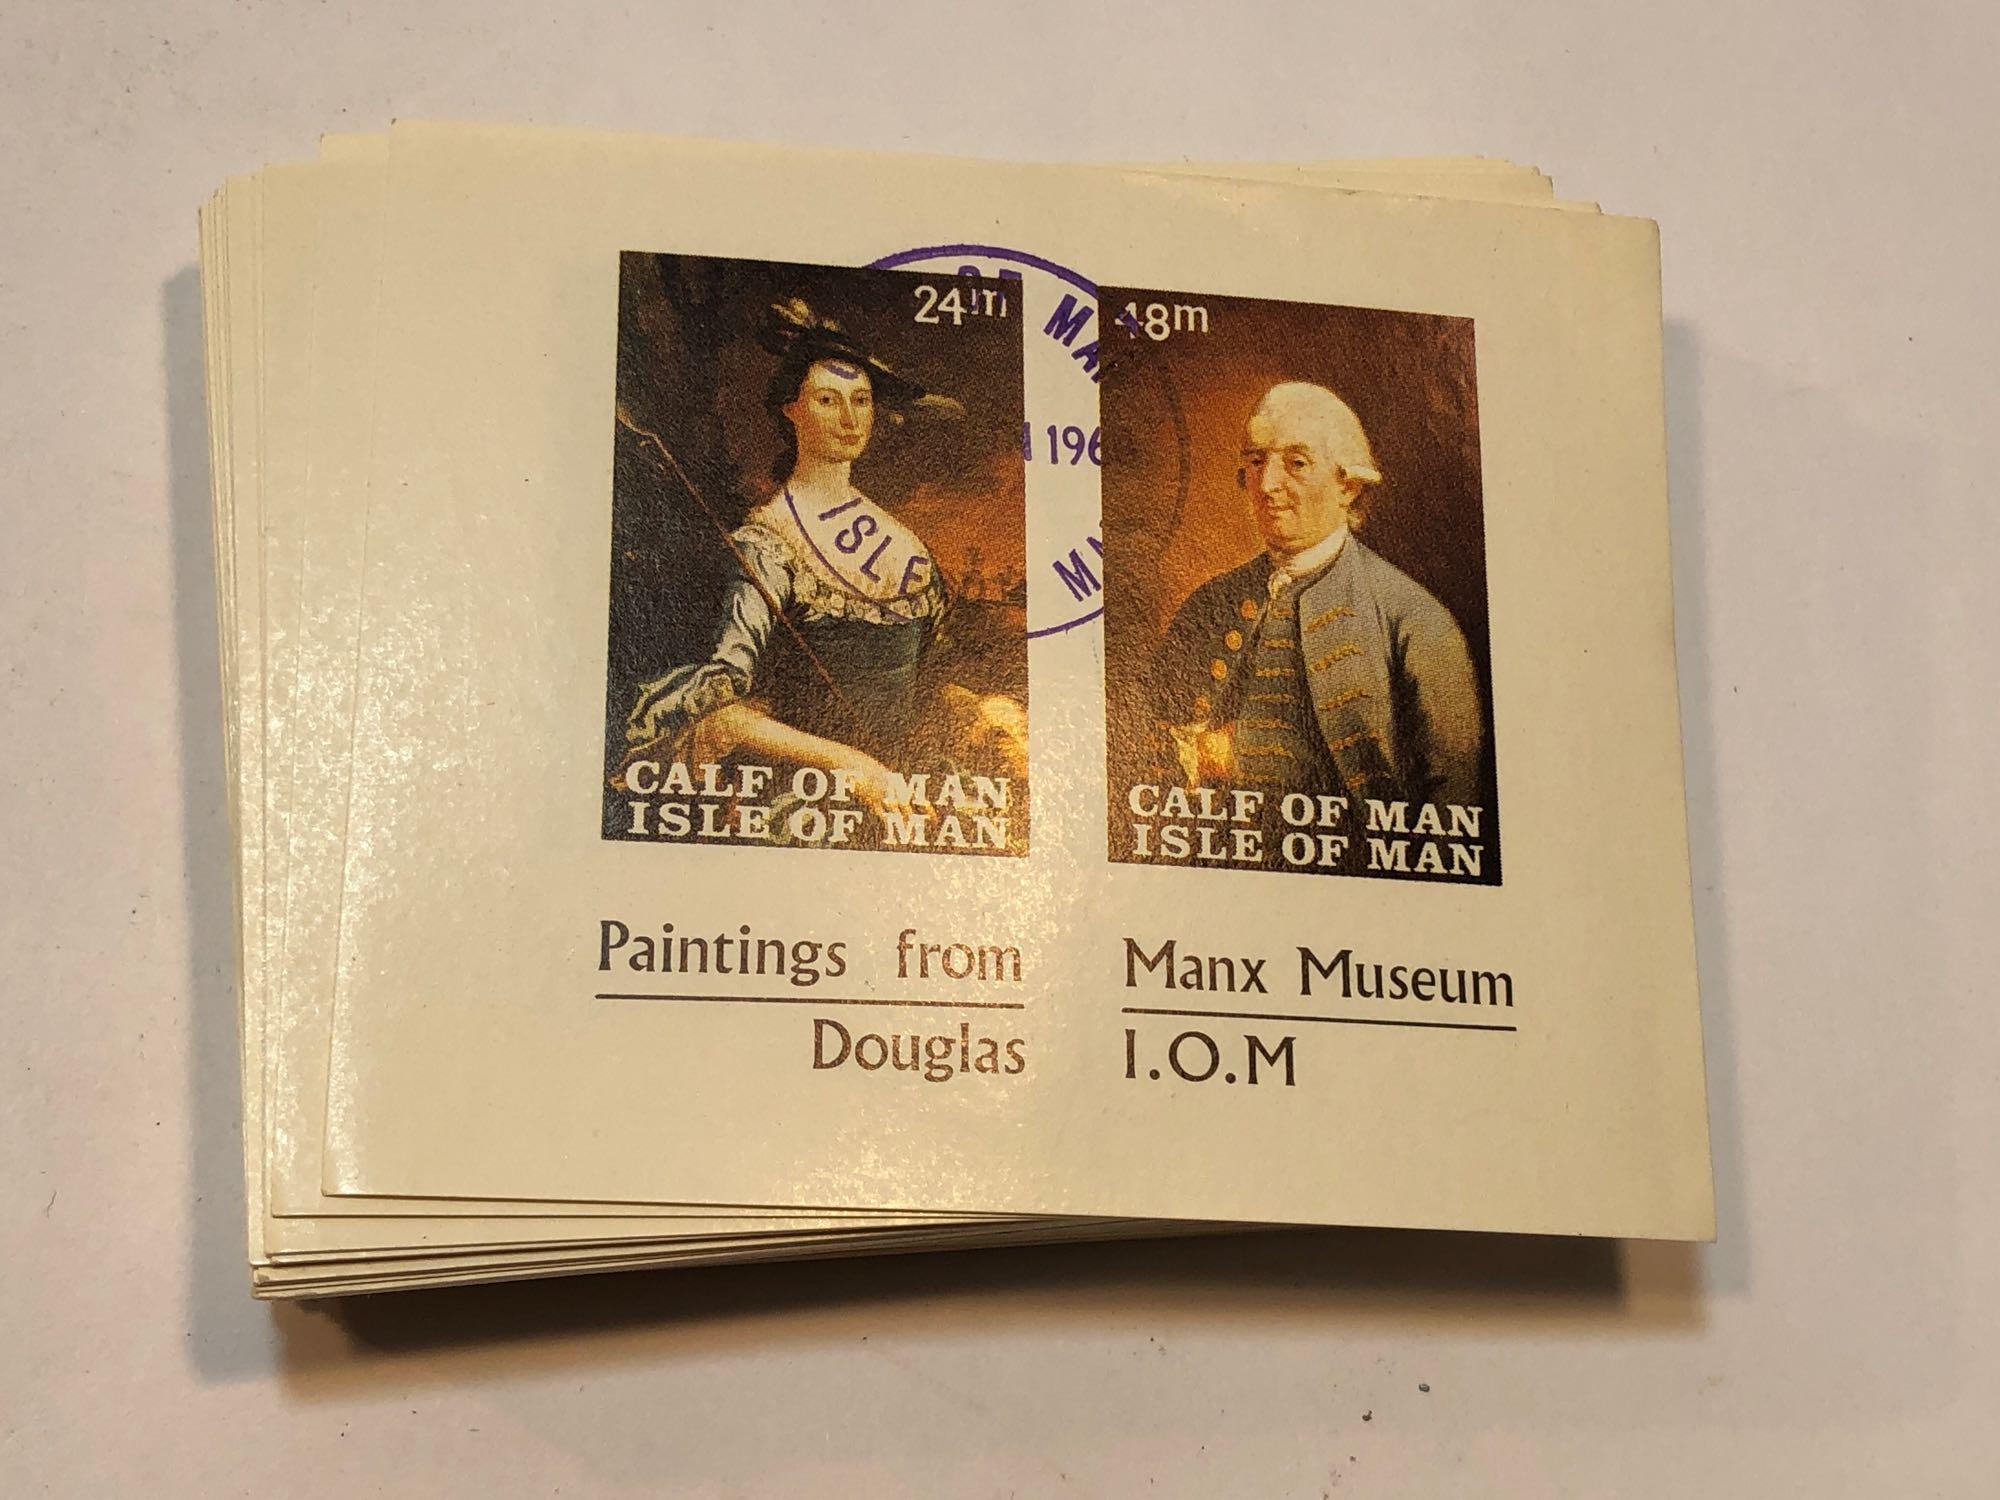 Souvenir Stamps, 3 Bundles